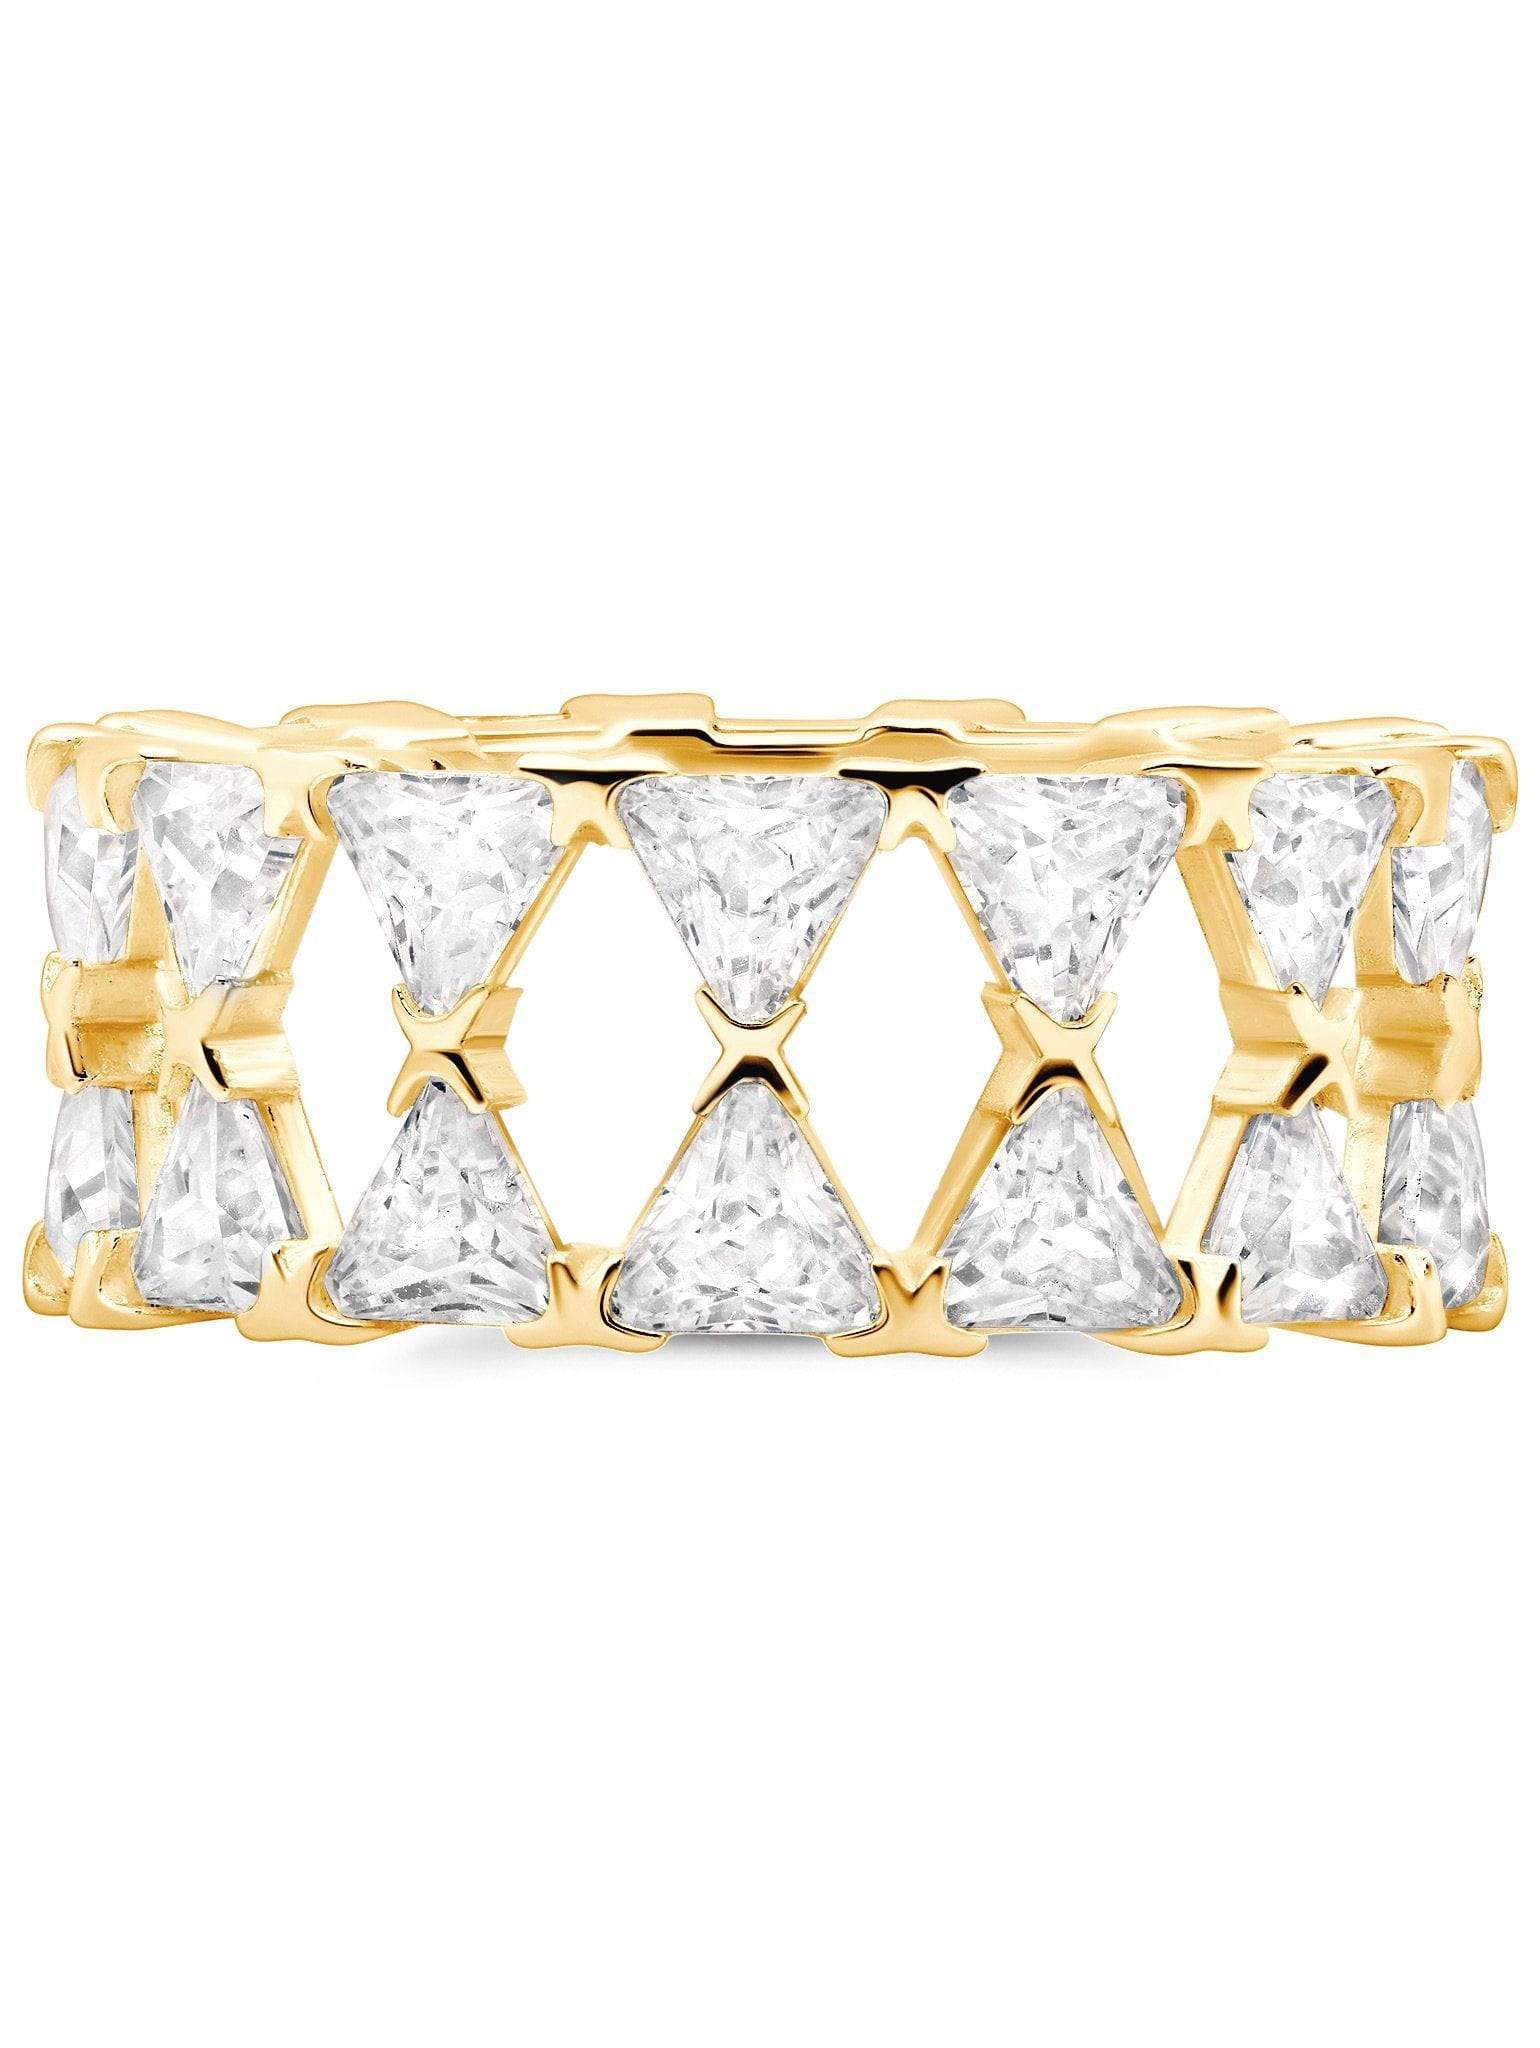 Crislu Jewelry Crislu Posh Trillion Cubic Zirconia Eternity Ring Finished in 18kt Gold Size 8